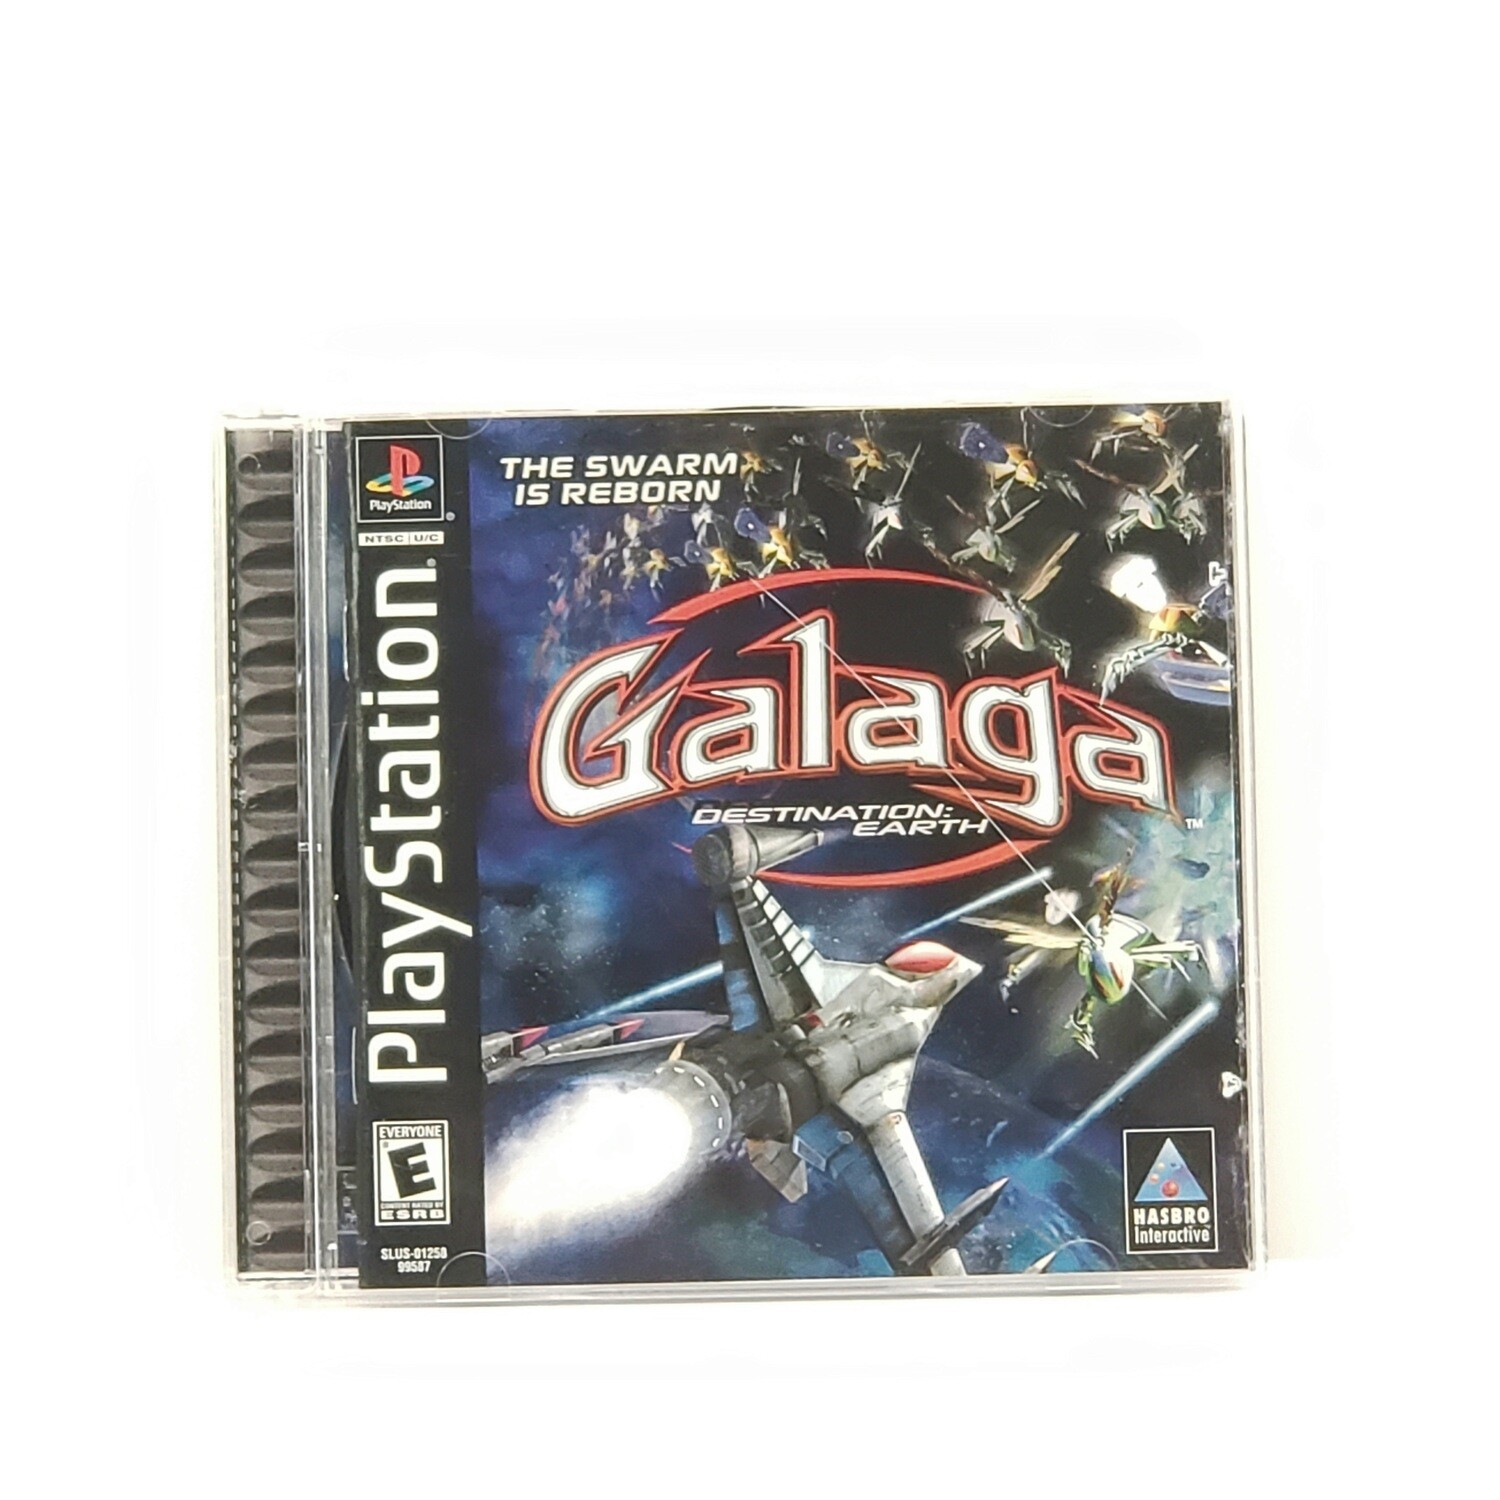 Galaga Destination: Earth Video Game for PS1 - CIB - Used